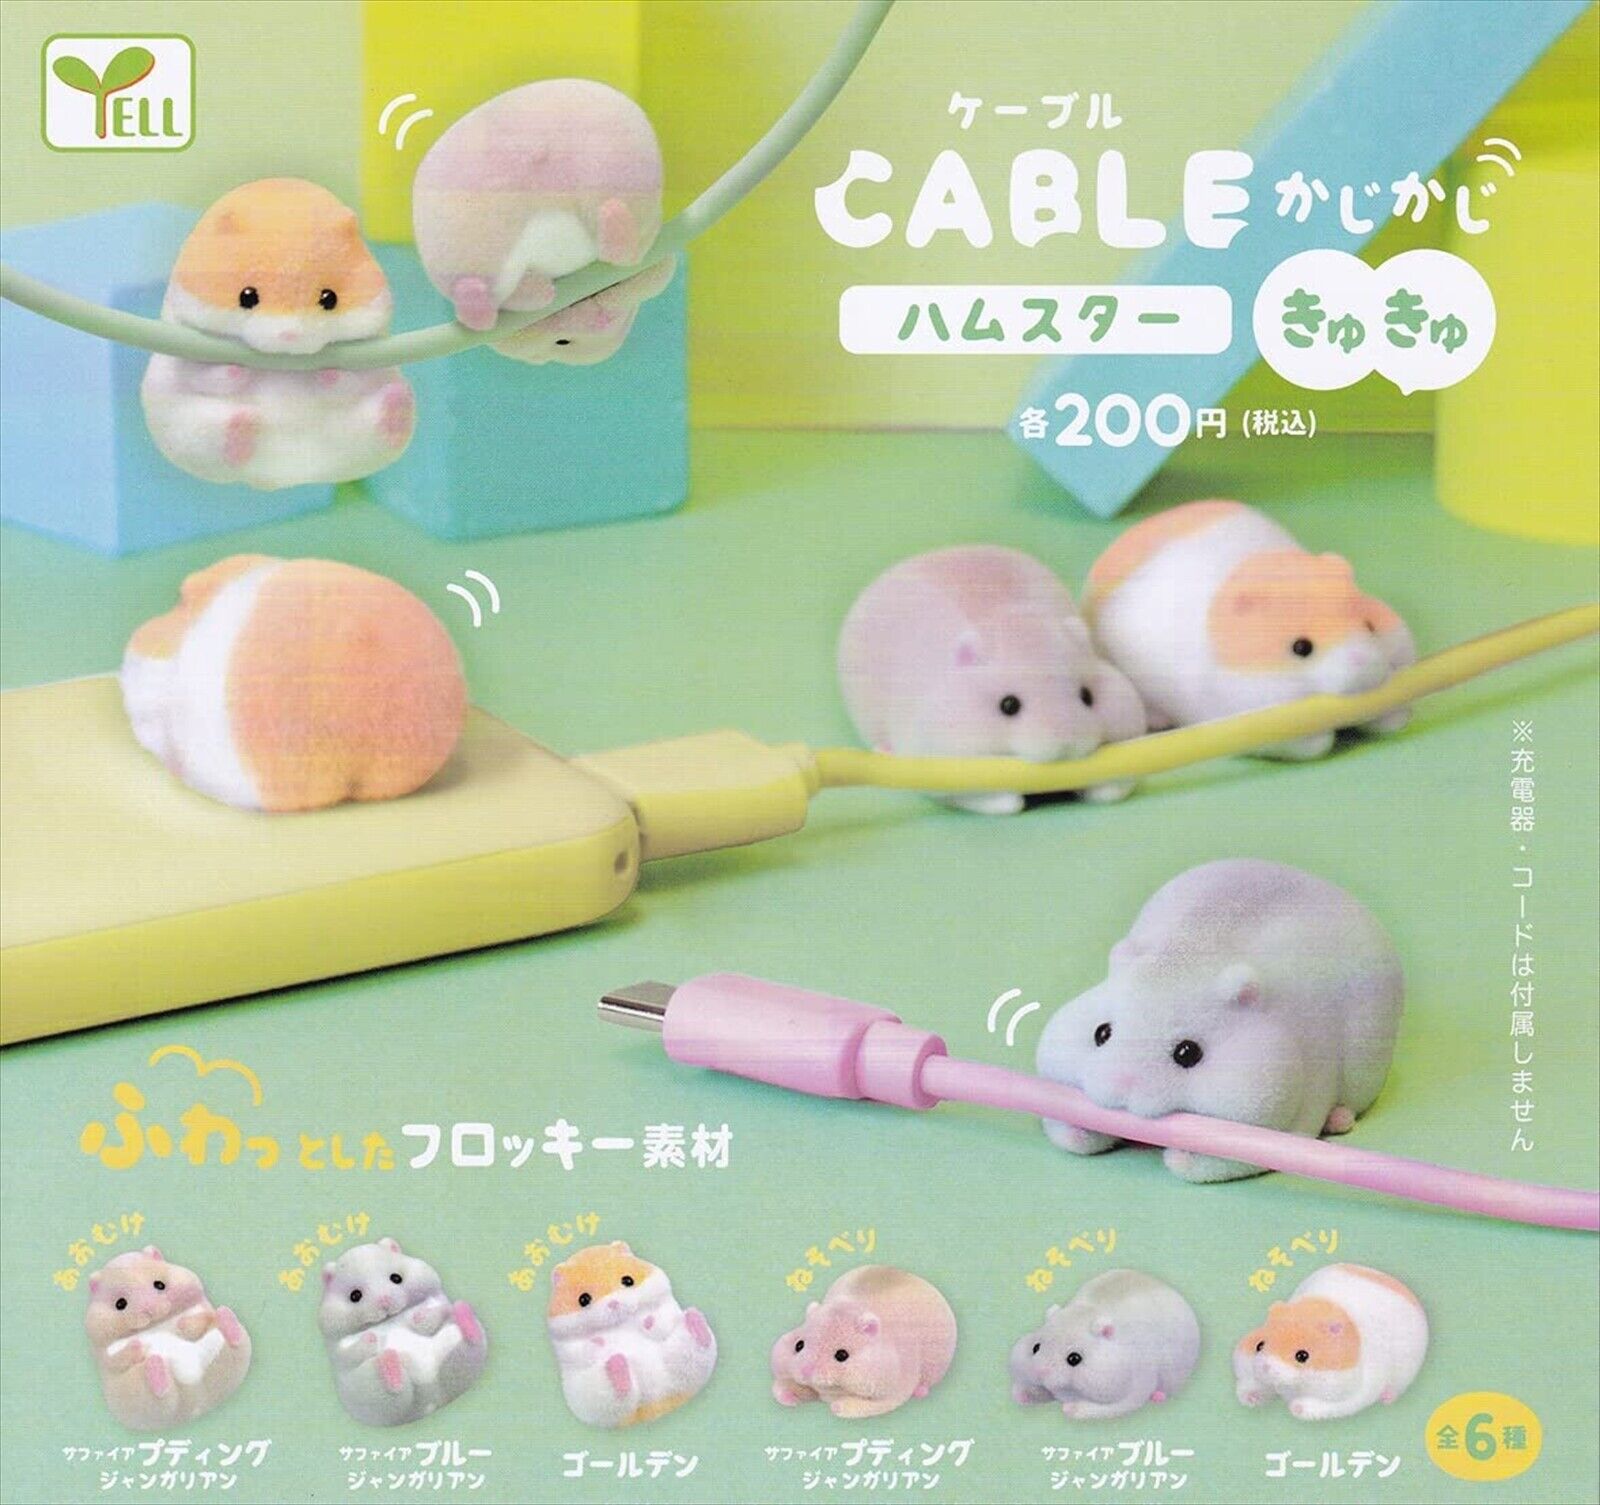 Hamster Kyukyu Cable Kaji Kaji Flocky Figure Full Set 6 Types Yell Capsule Toy